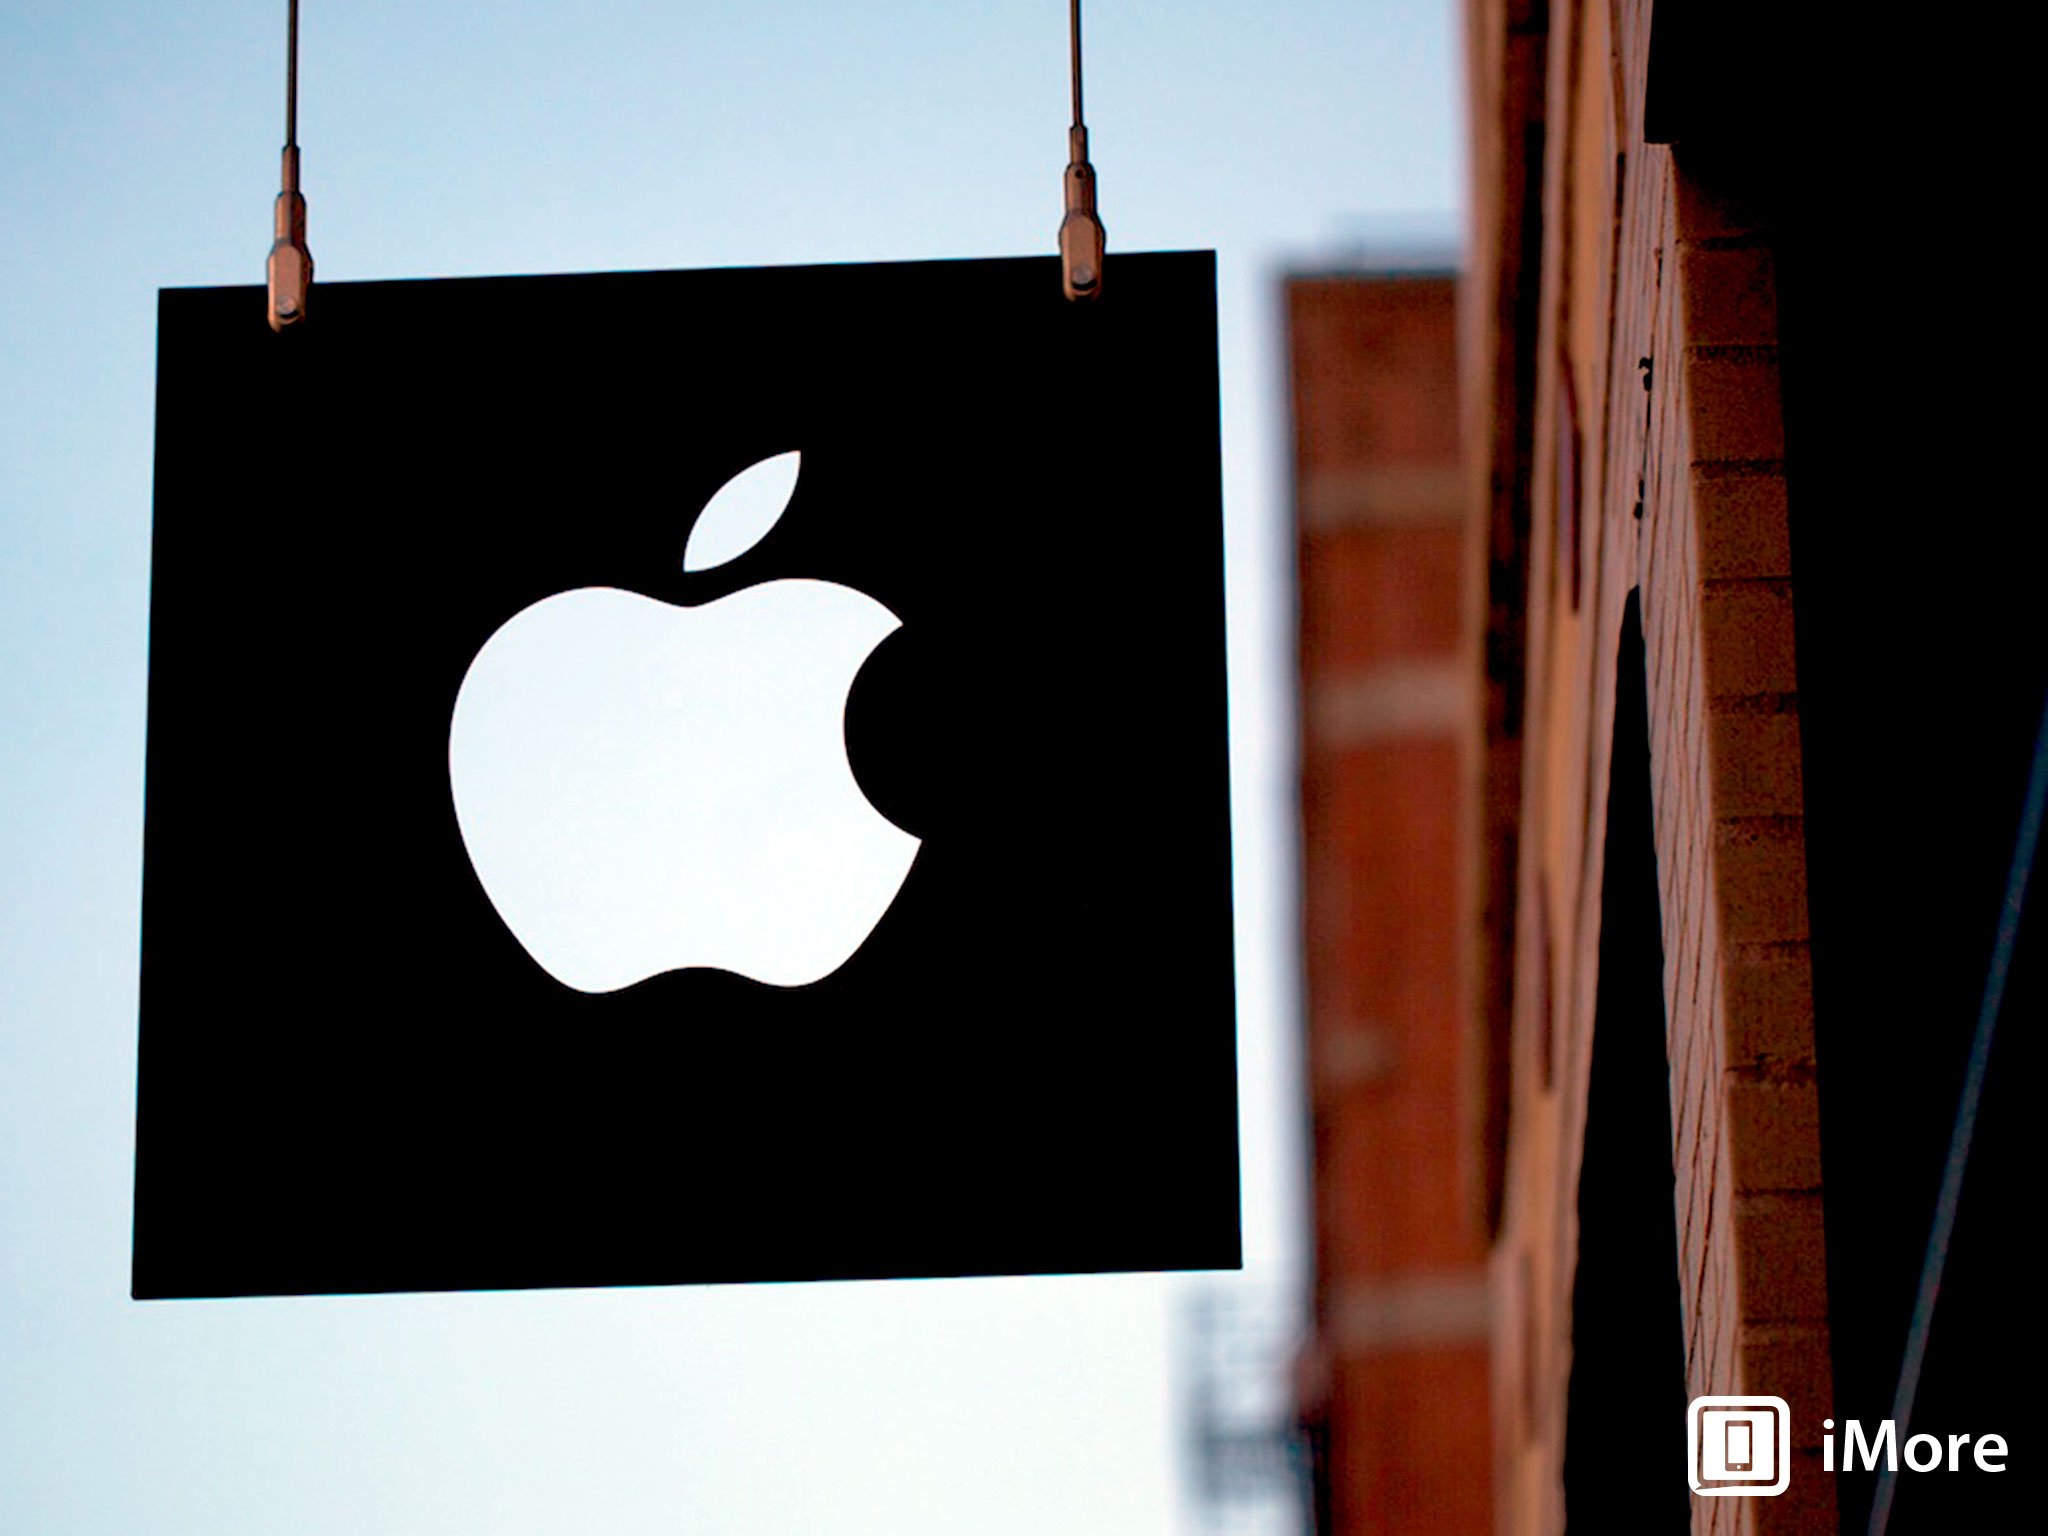 Apple announces Q2 2014 earnings: 43.7 million iPhones, 16.3 million iPads, 4.1 million Macs sold